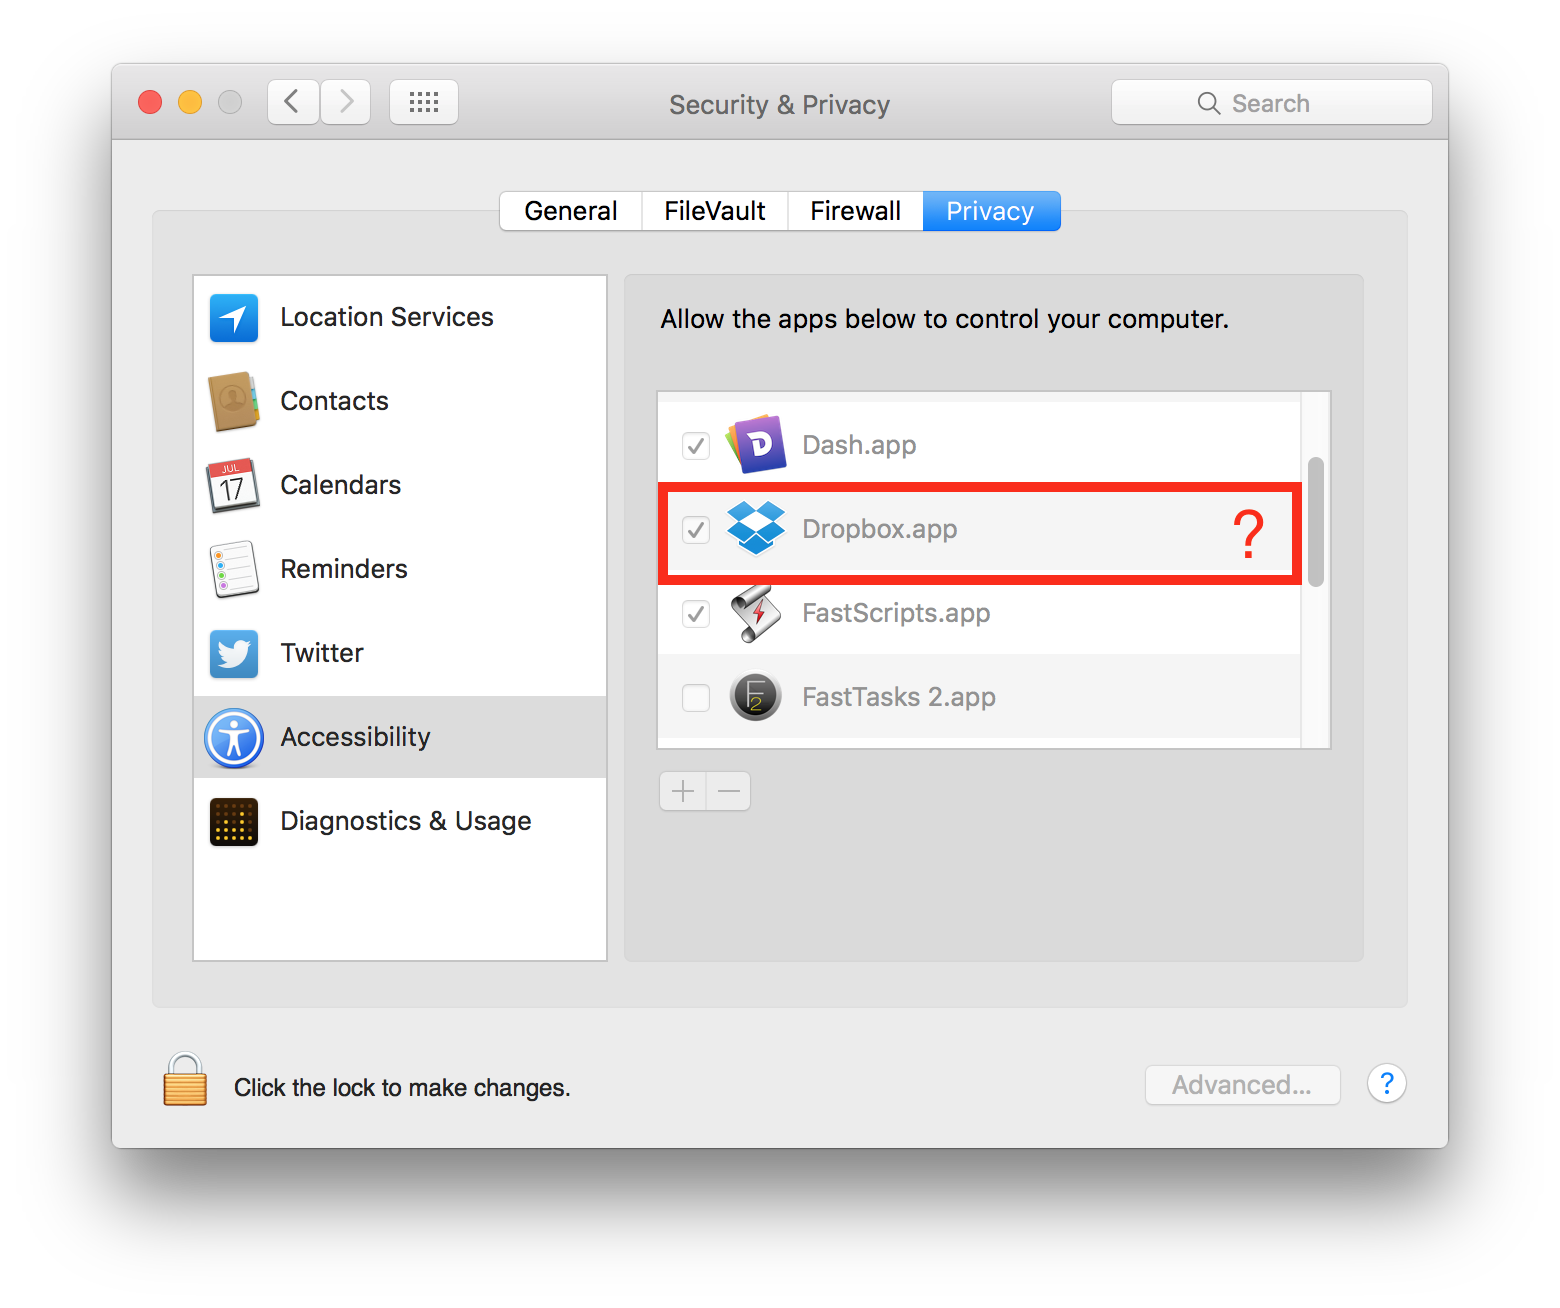 app for dropbox mac